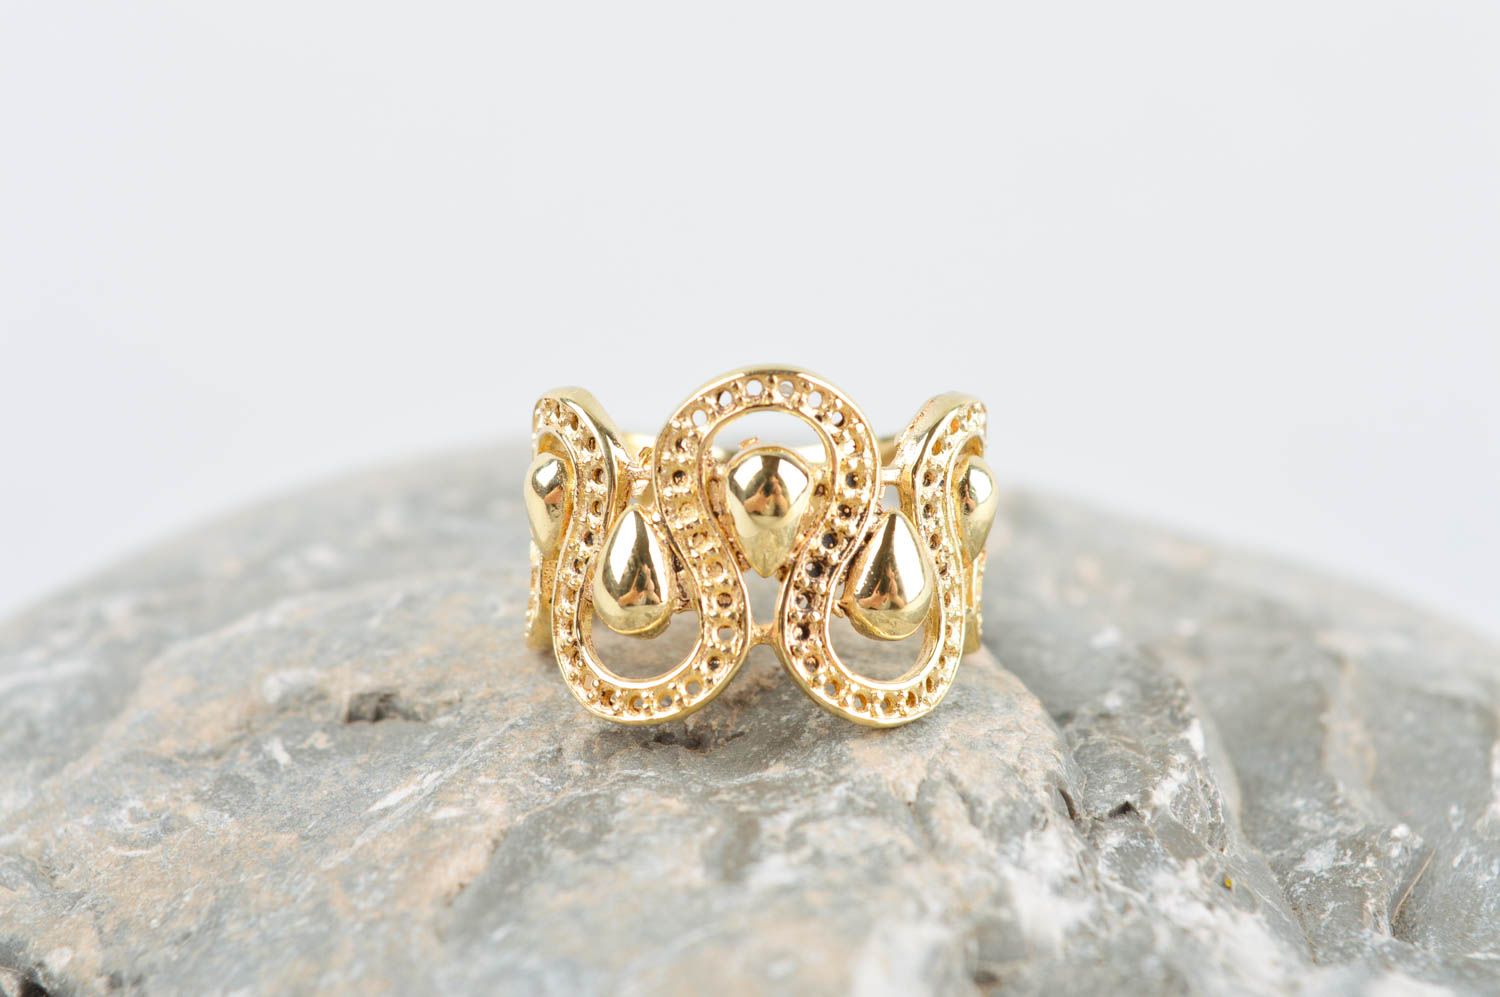 Stylish handmade metal ring brass ring design handmade accessories small gifts photo 1